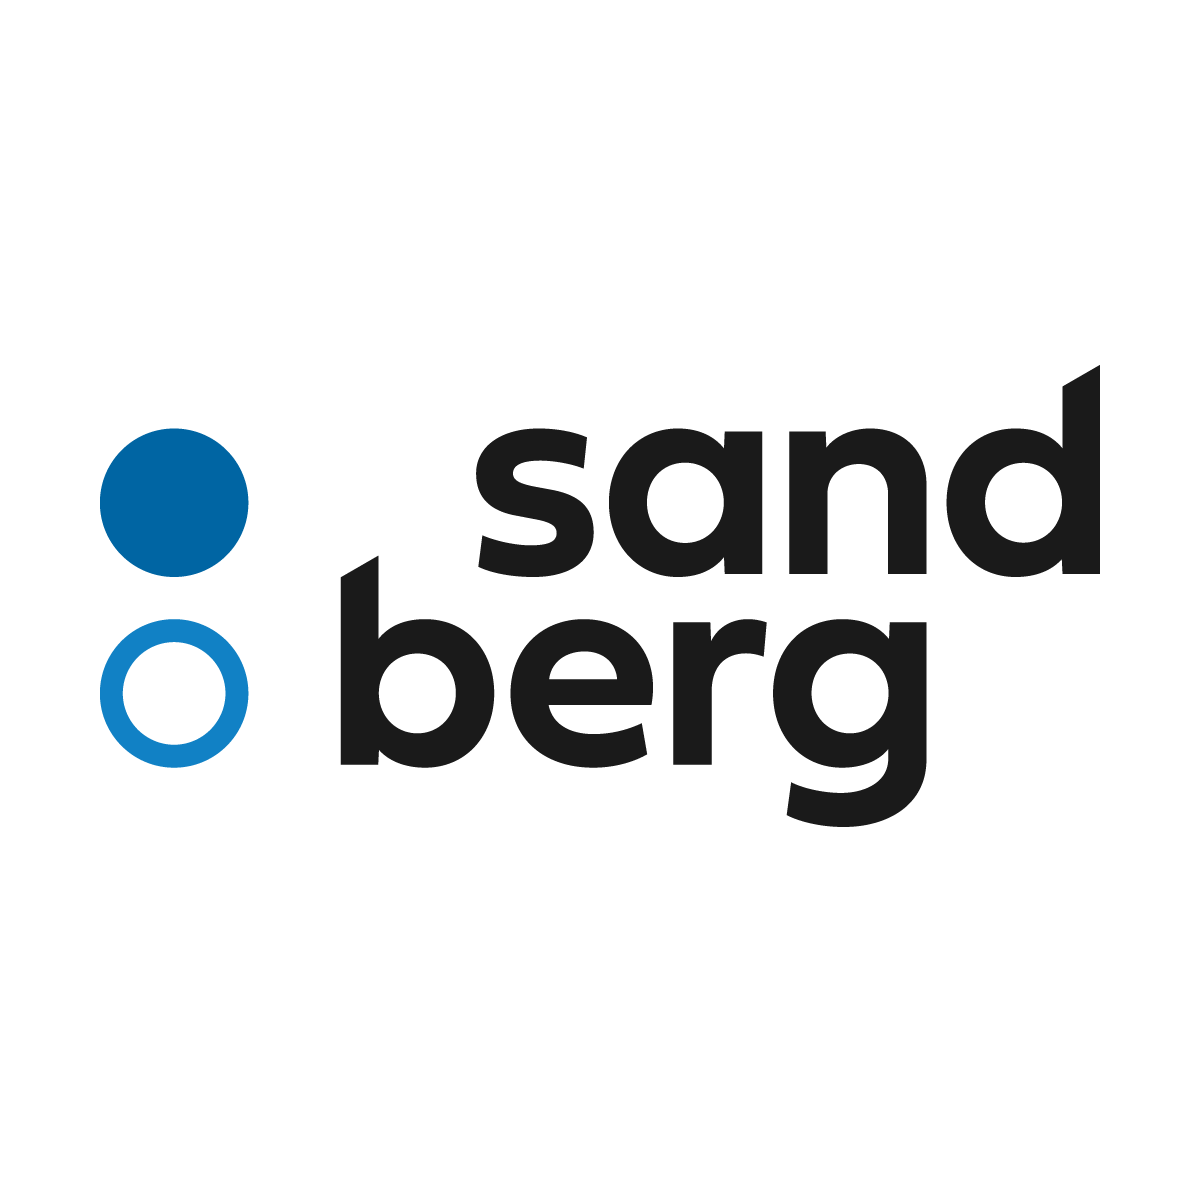 Sandberg Logo